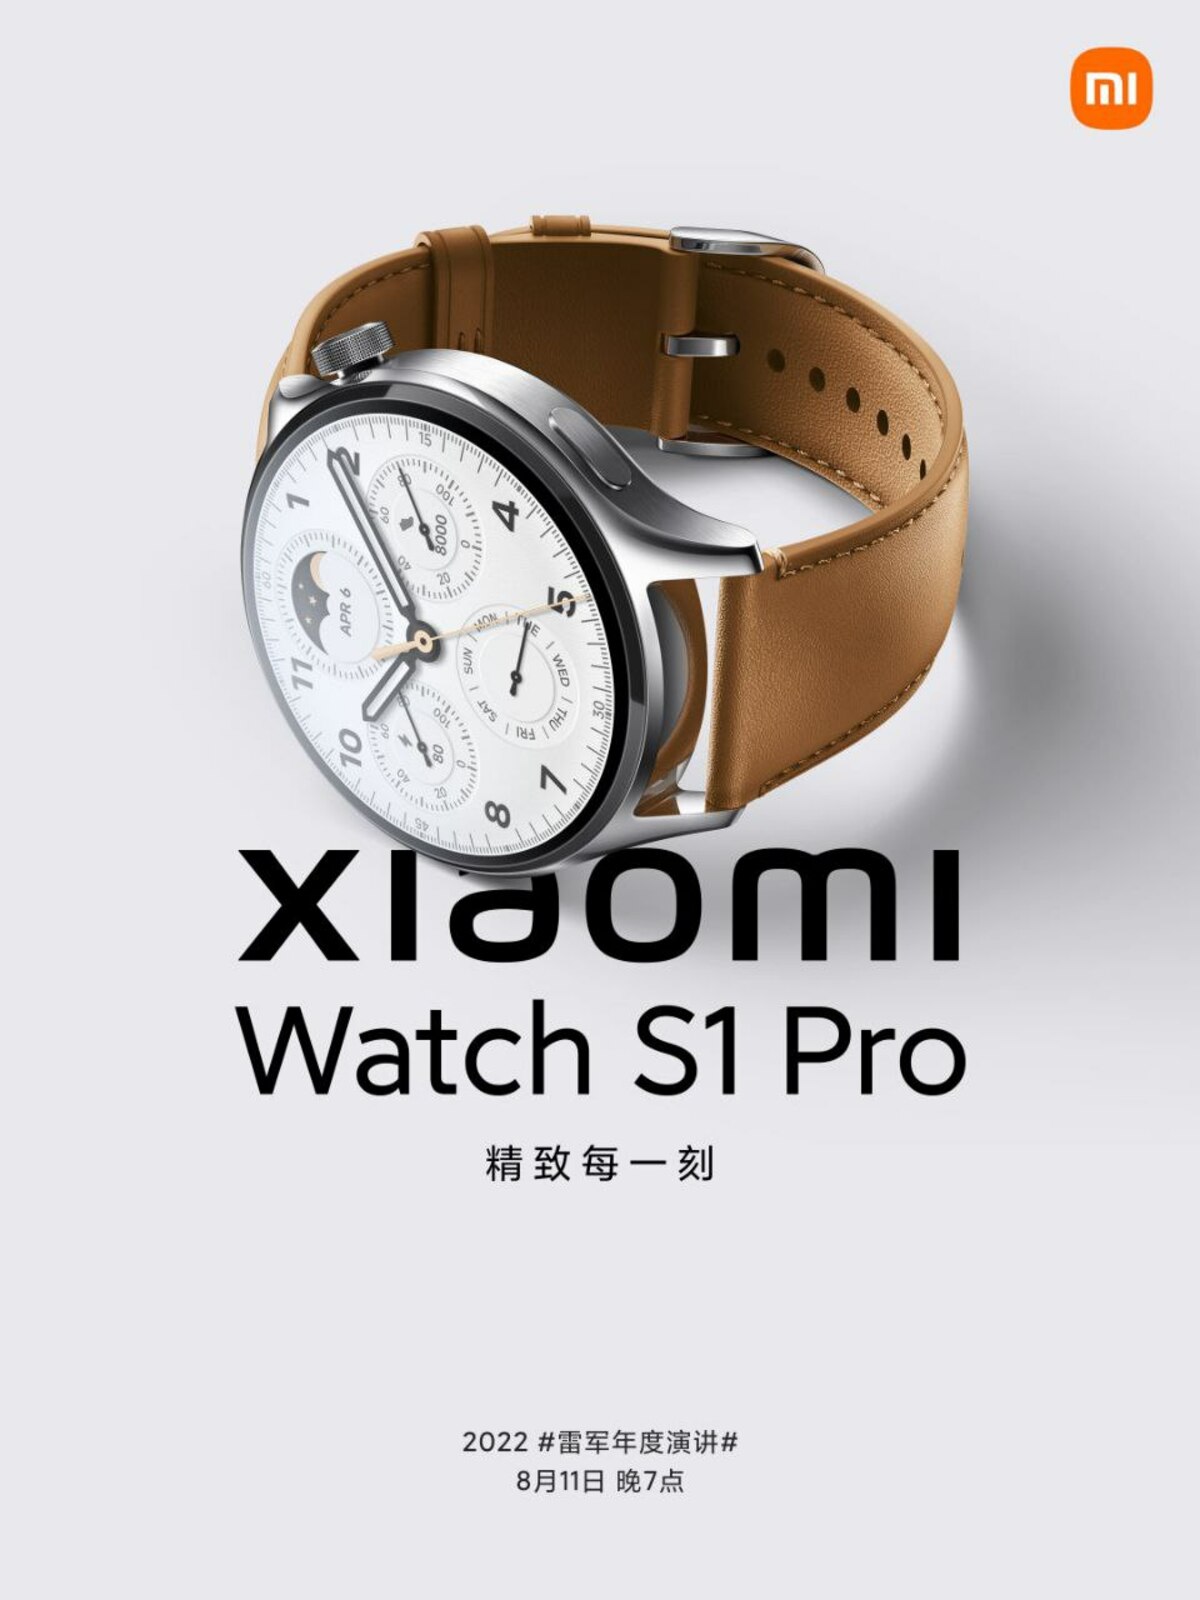 Xiaomi Watch S1 Pro review -  news